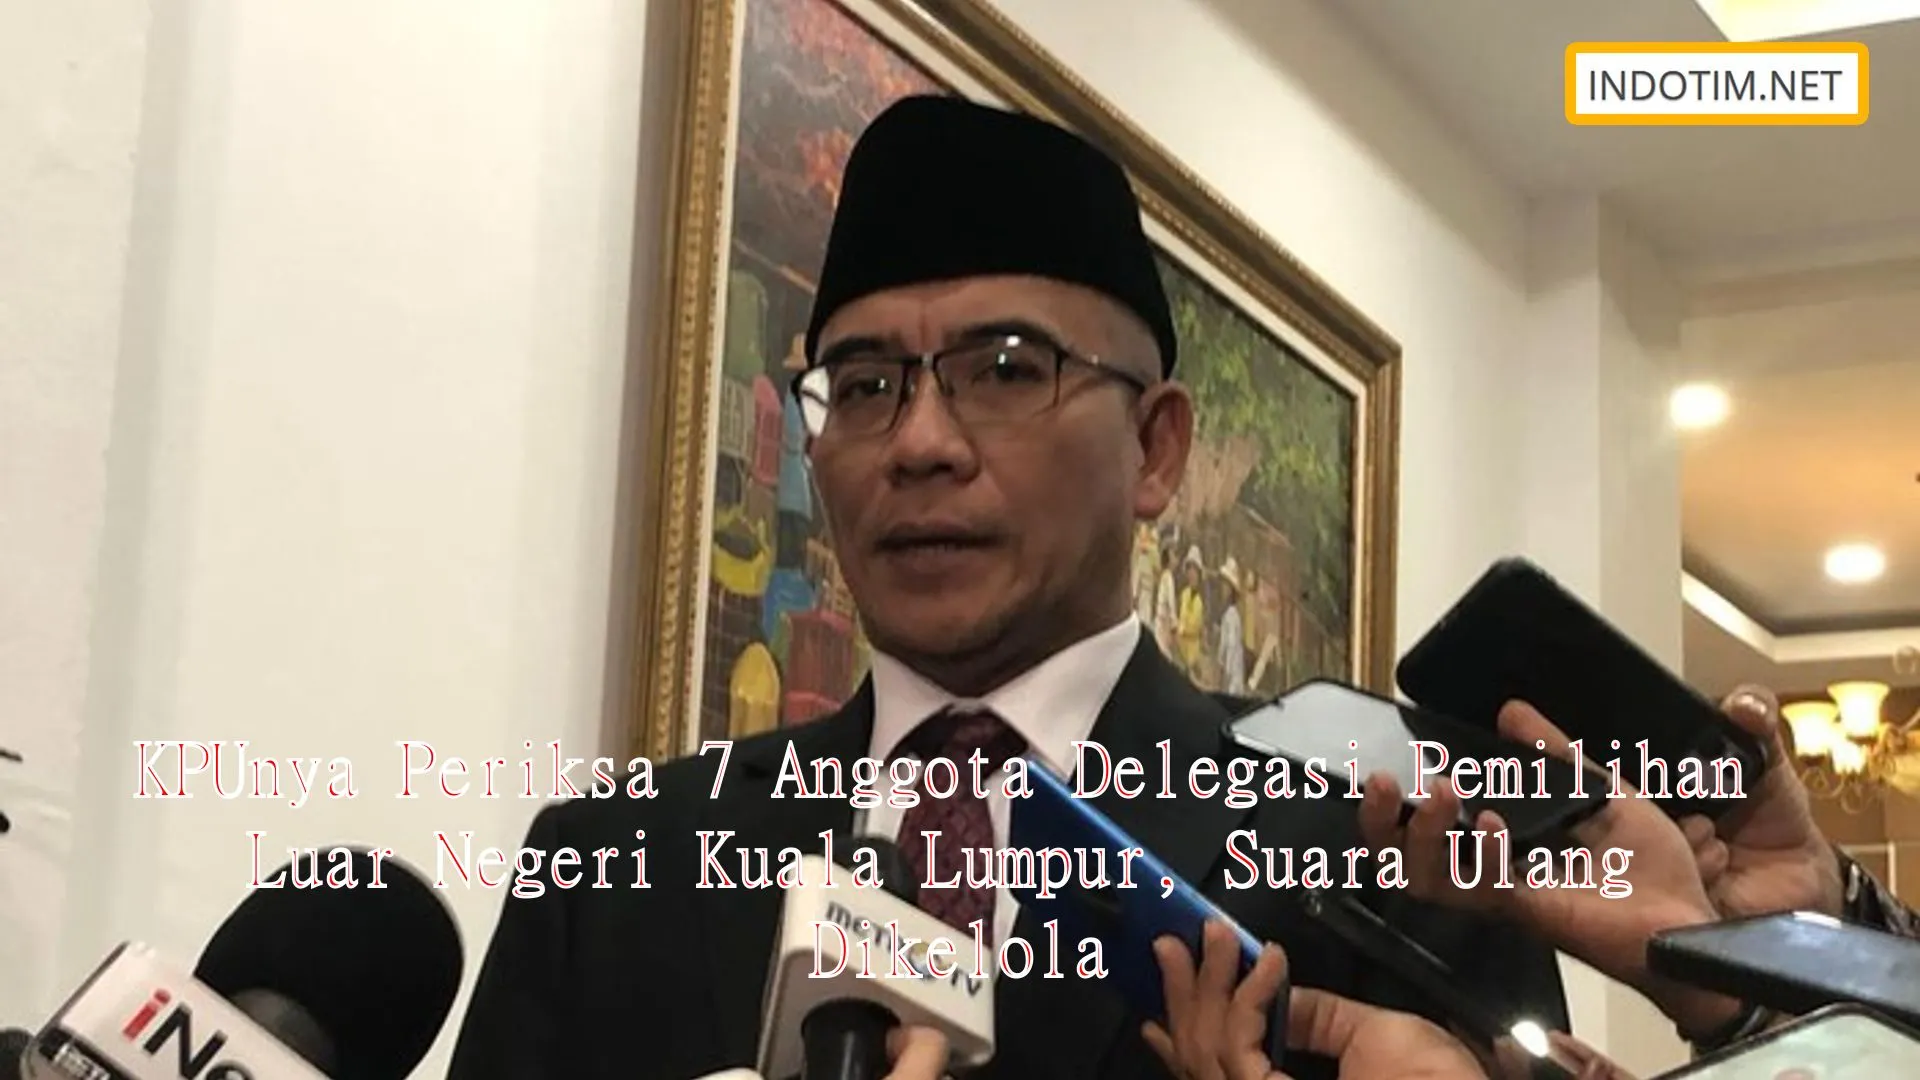 KPUnya Periksa 7 Anggota Delegasi Pemilihan Luar Negeri Kuala Lumpur, Suara Ulang Dikelola